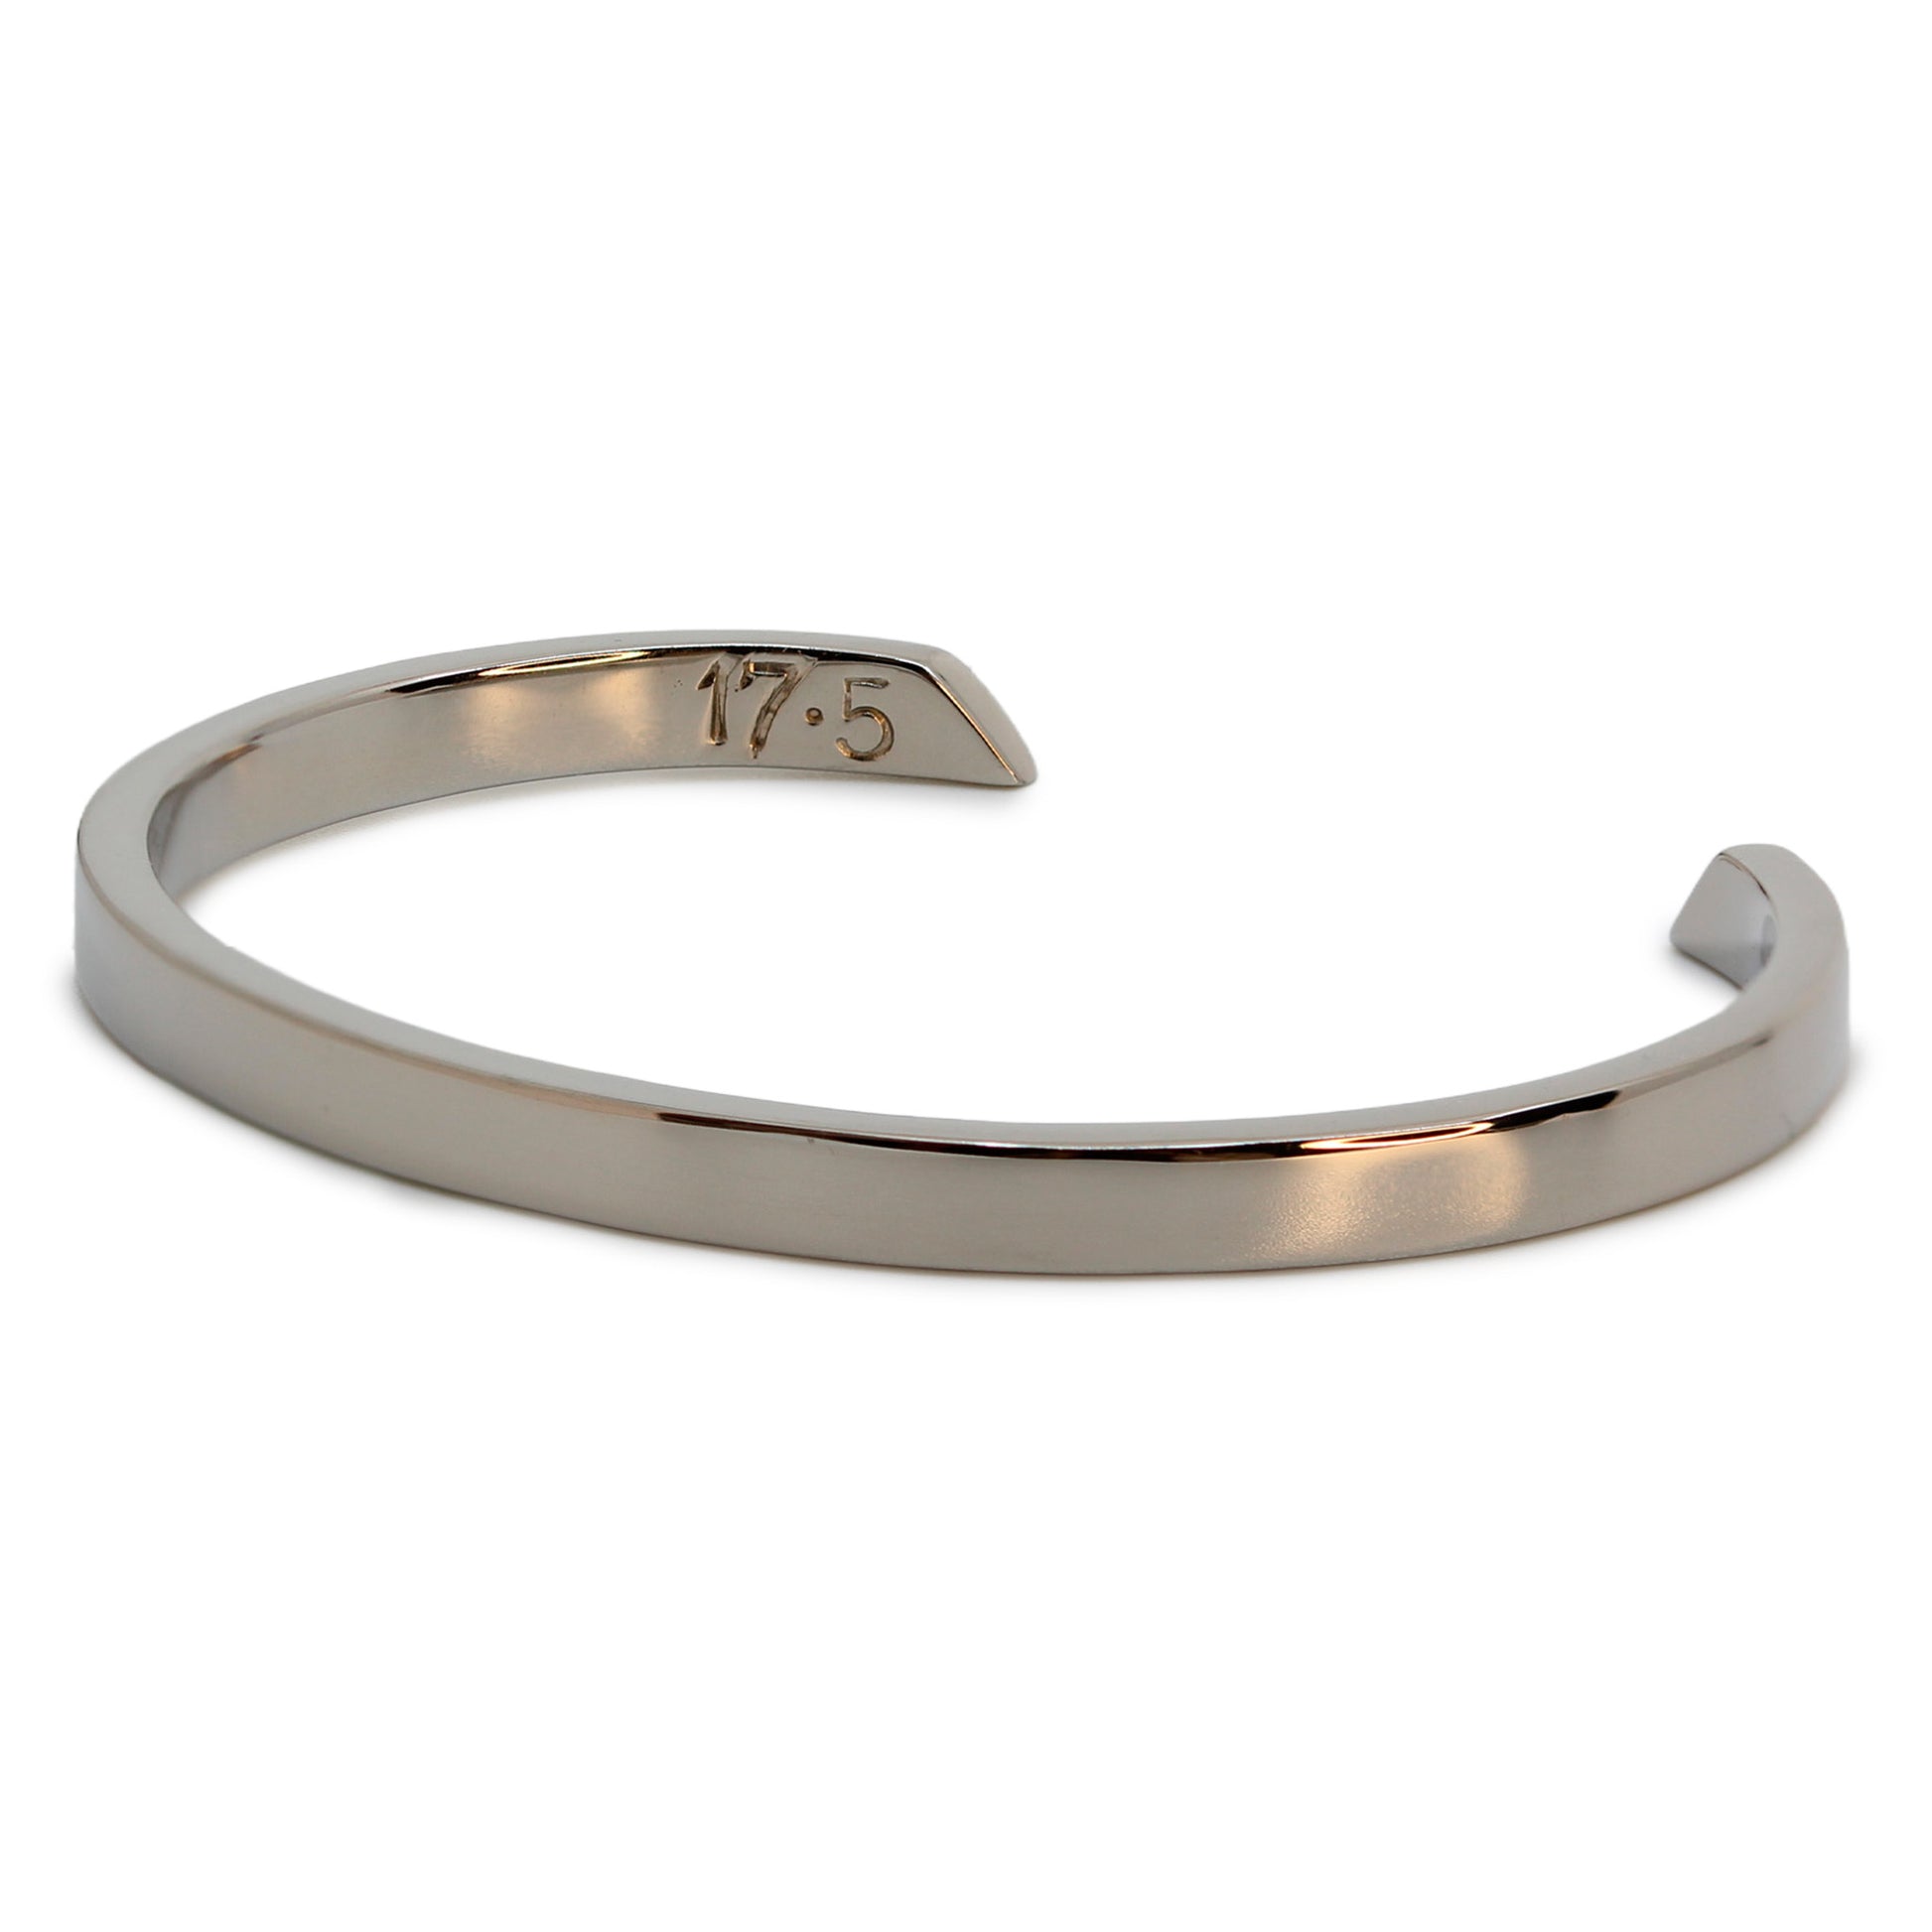 Single silver-colored titanium bangle, 5 mm wide. Image shows corner view of bangle.